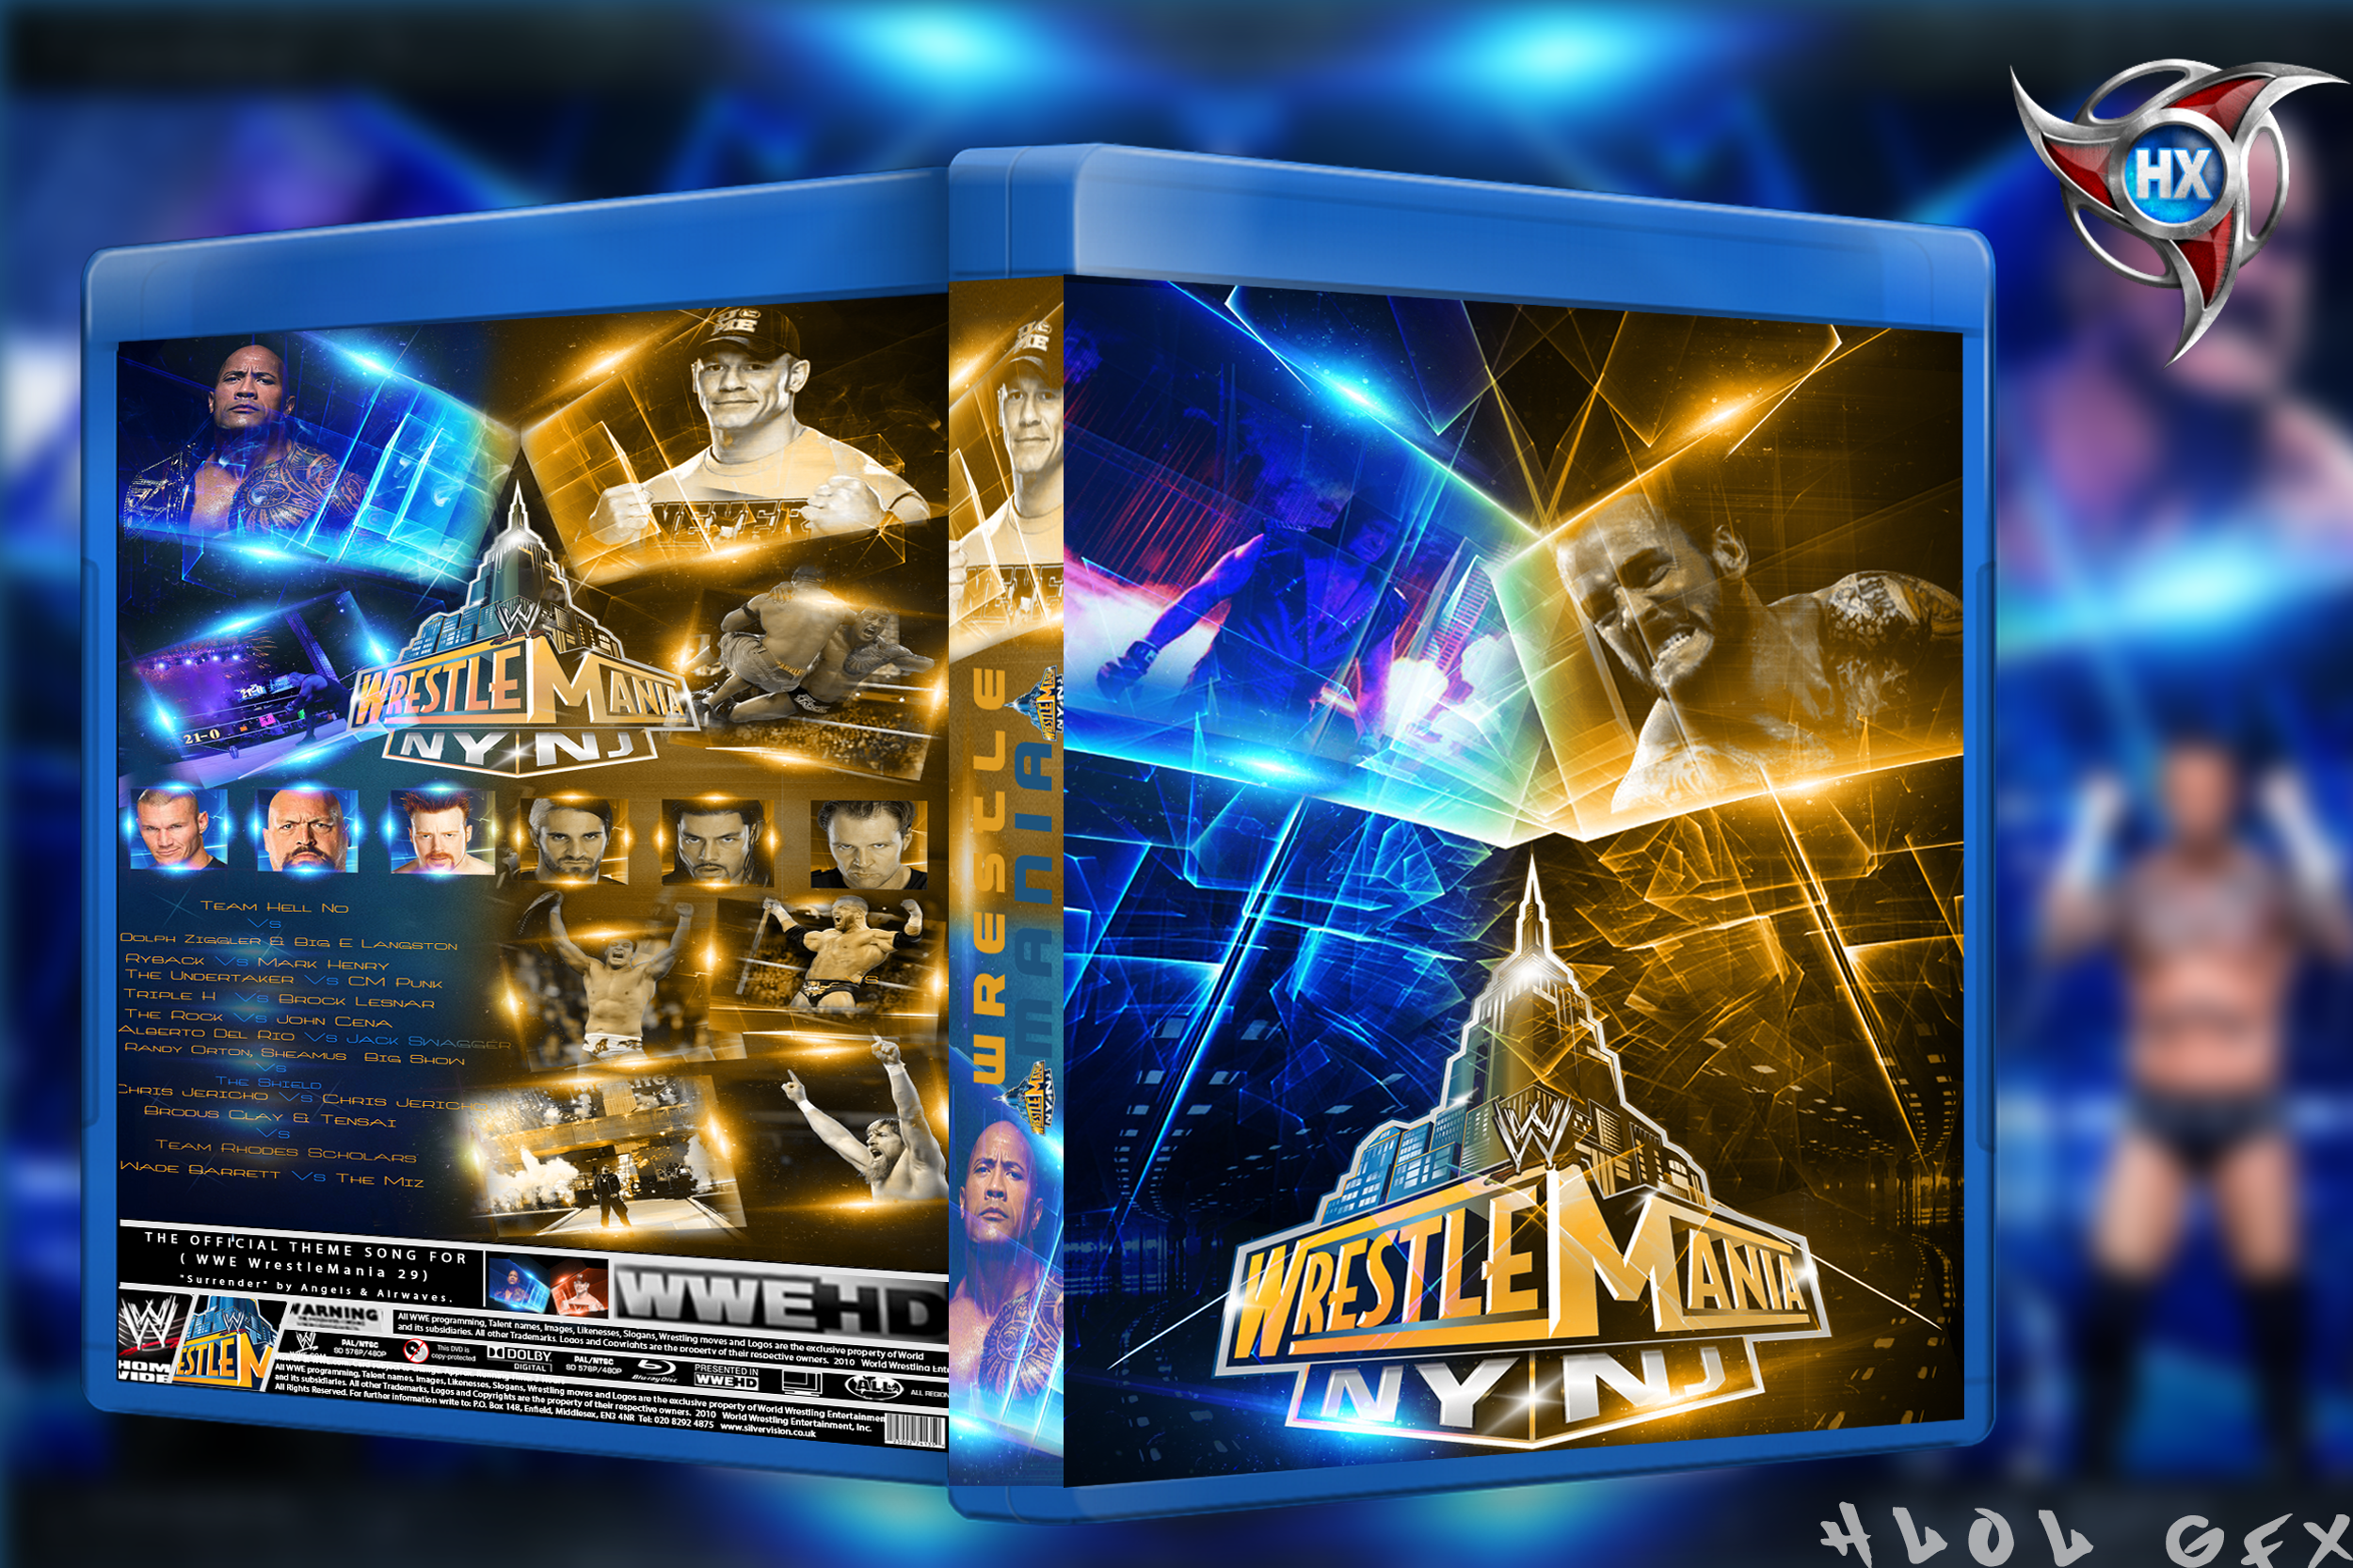 WWE WrestleMania 29 Blu-ray box cover